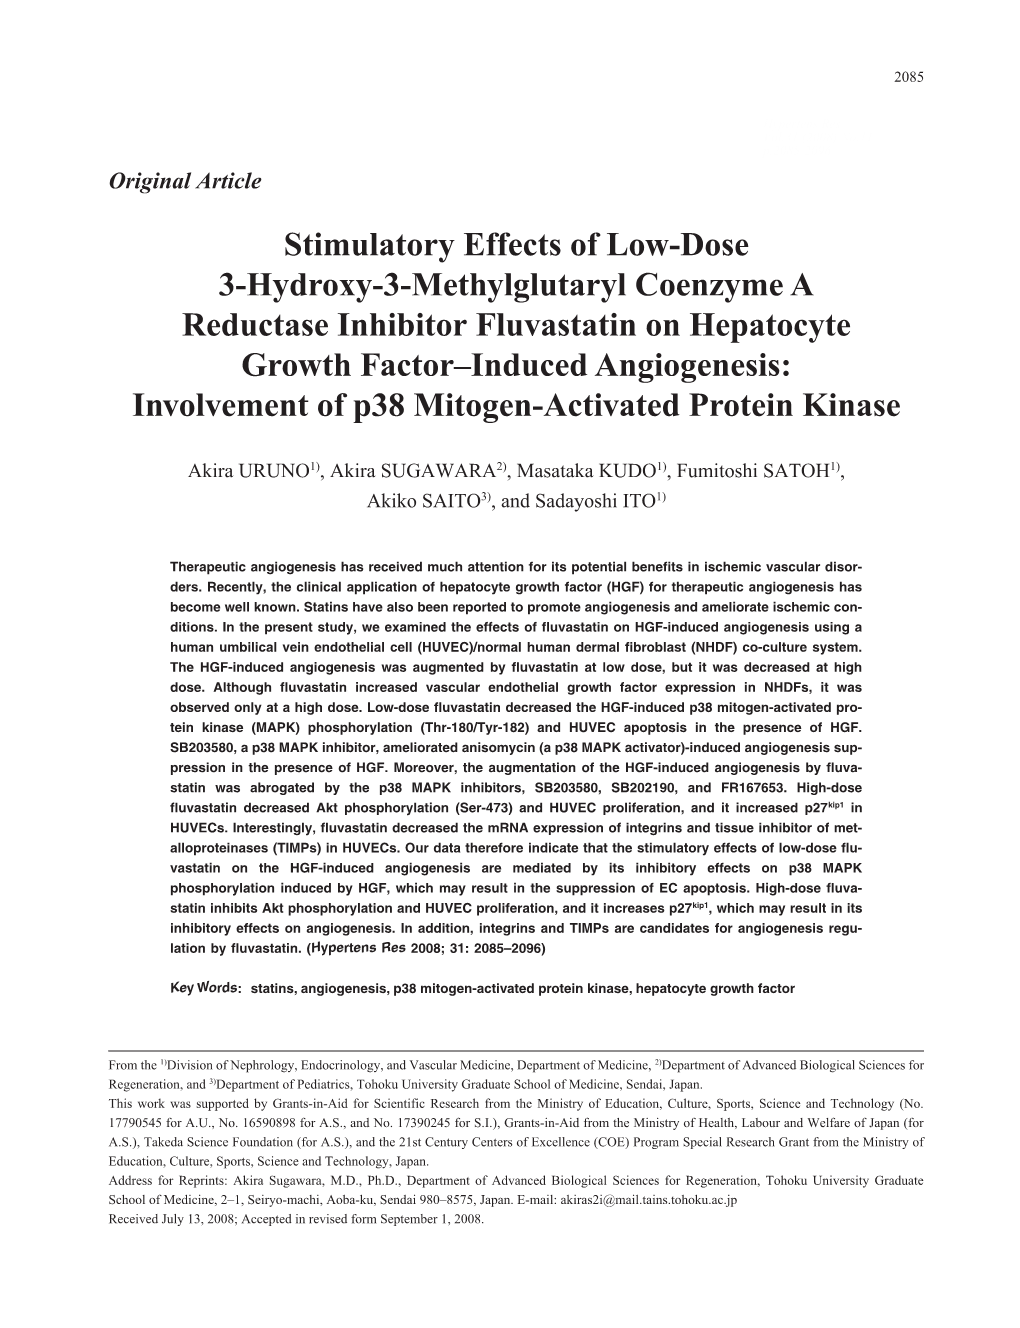 Stimulatory Effects of Low-Dose 3-Hydroxy-3-Methylglutaryl